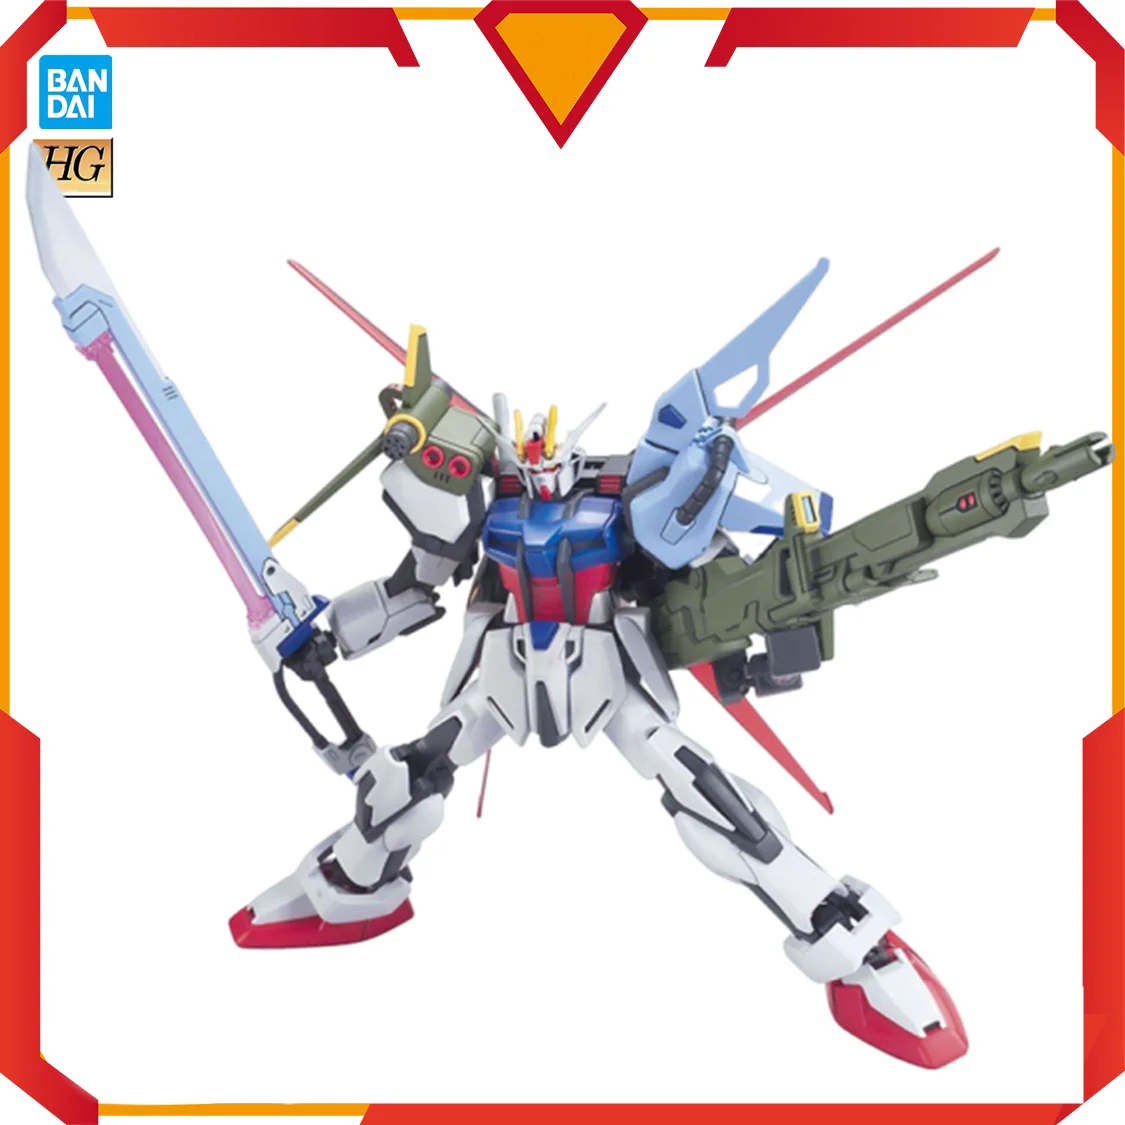 

In stock Original Bandai Anime figure HG SEED 1/144 Perfect Strike Gundam Assembled Model Toy Birthday Gift